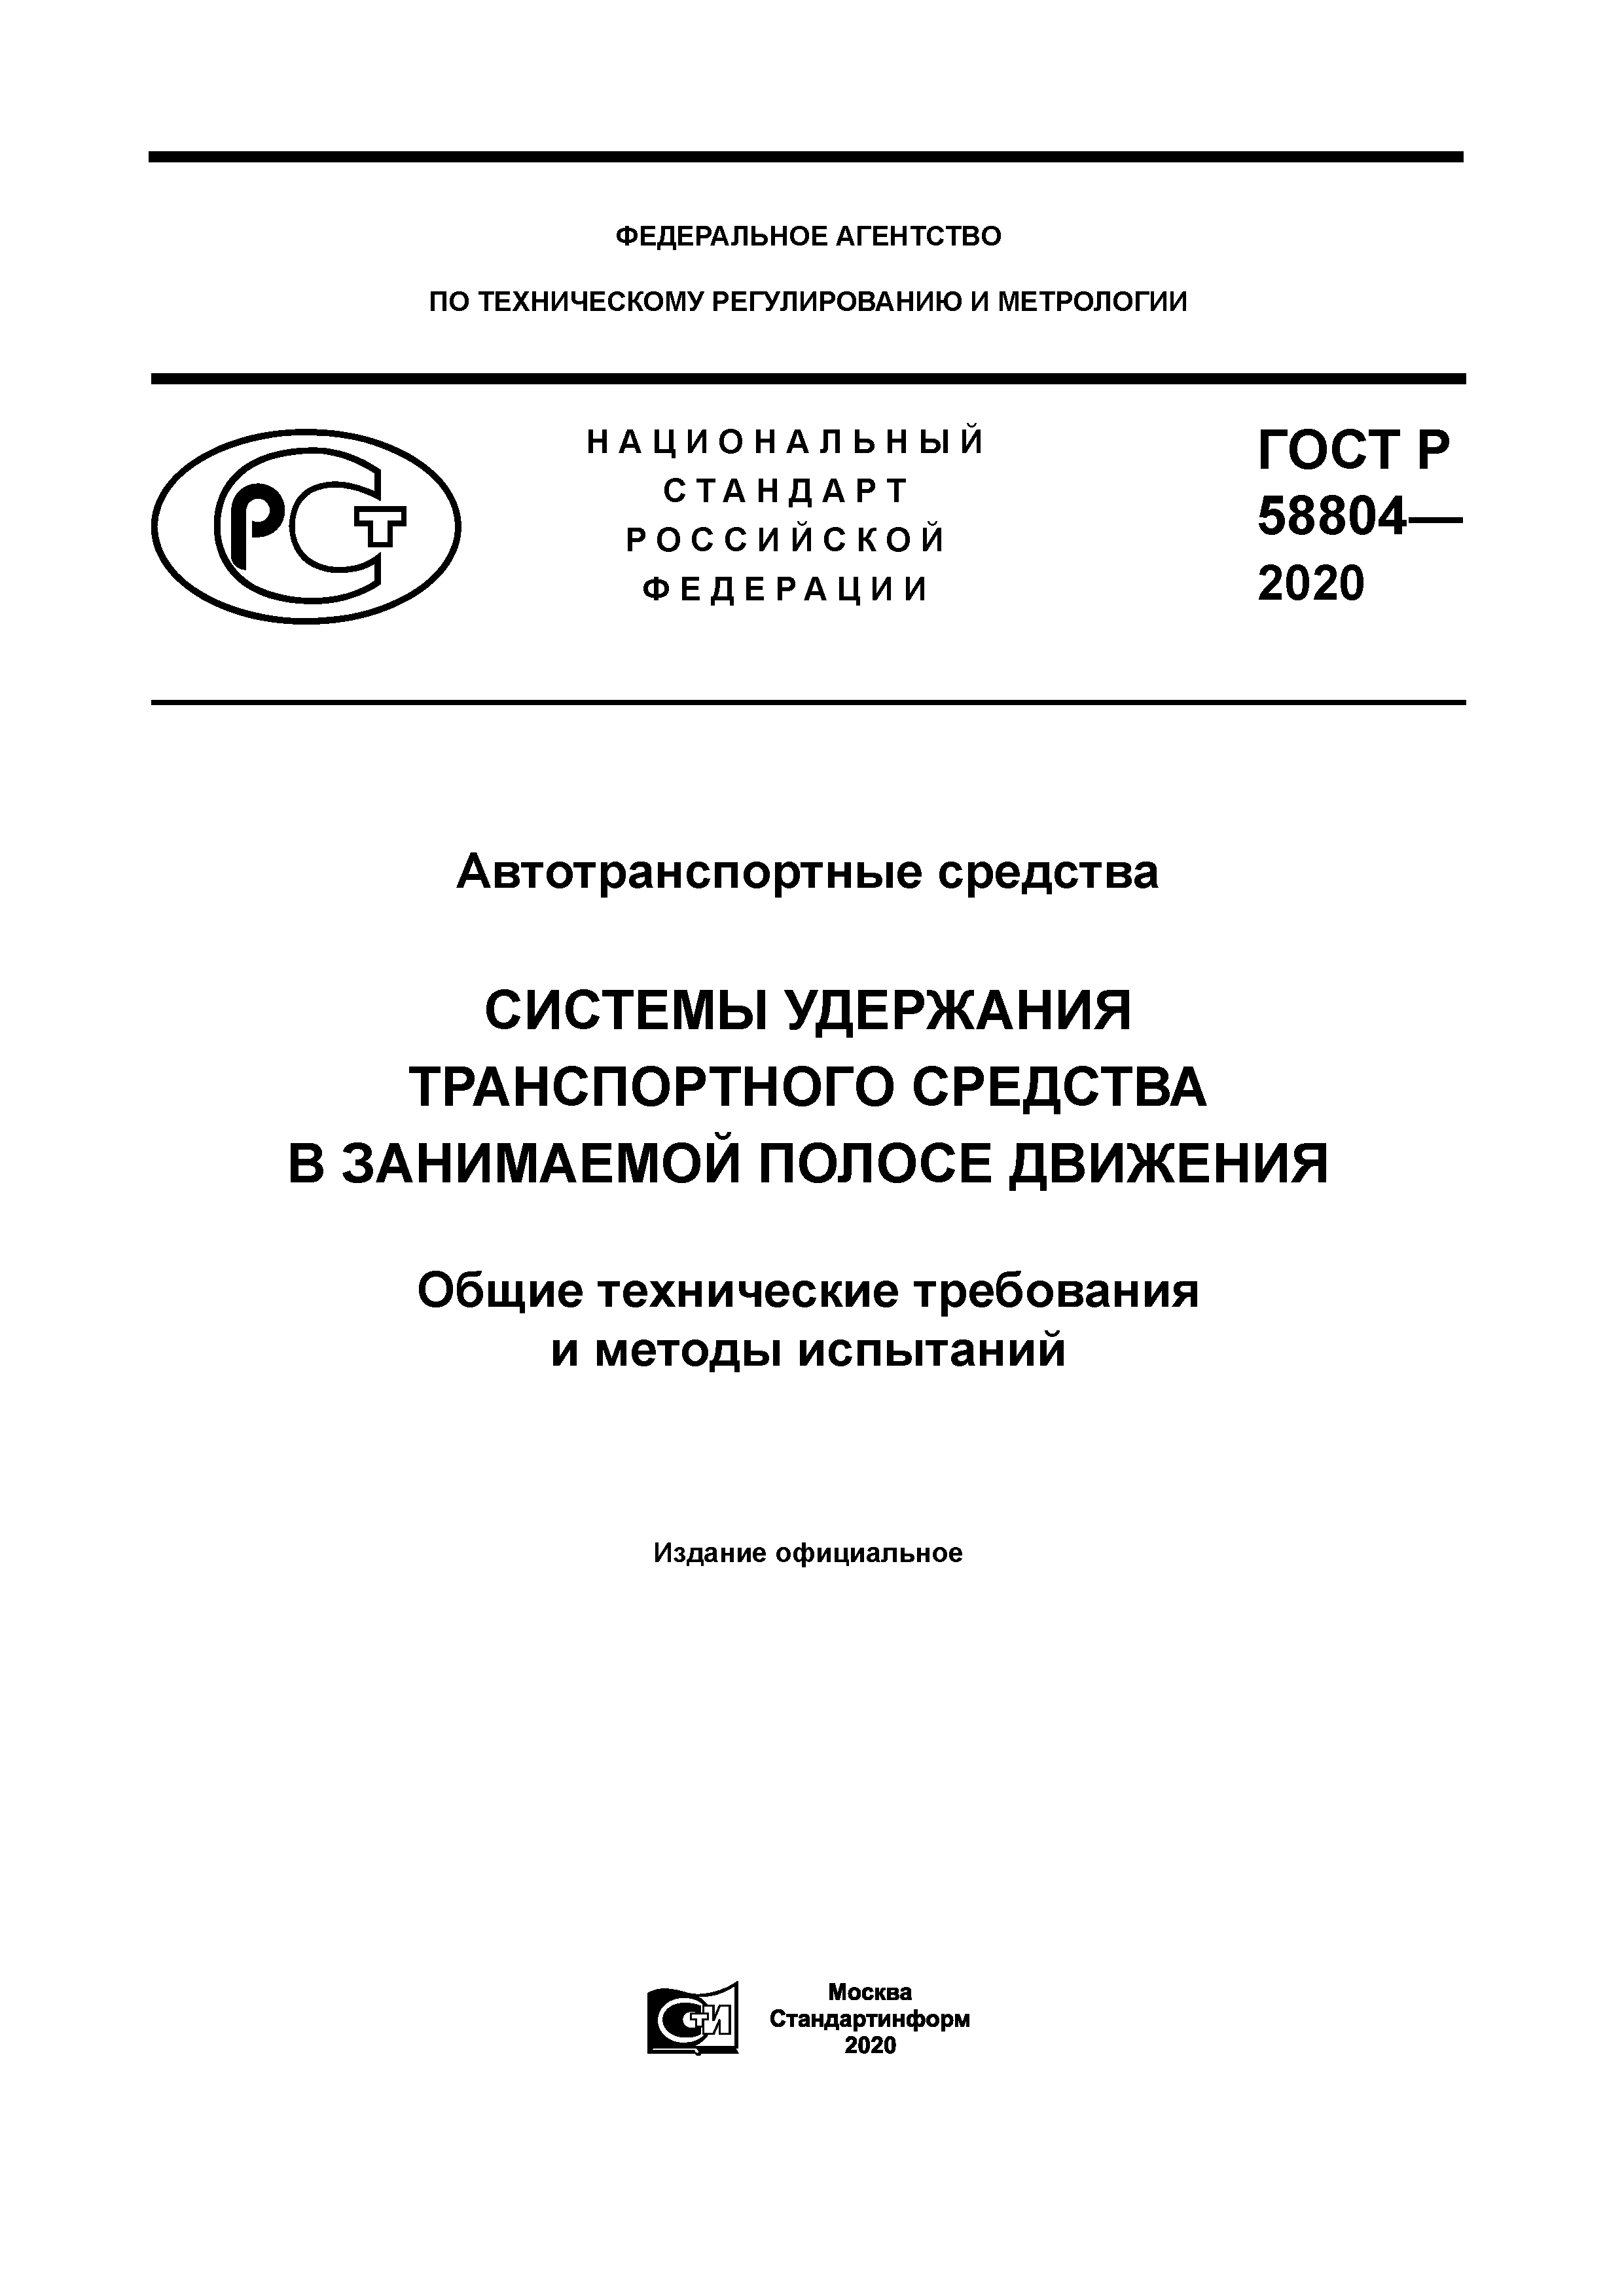 ГОСТ Р 58804-2020